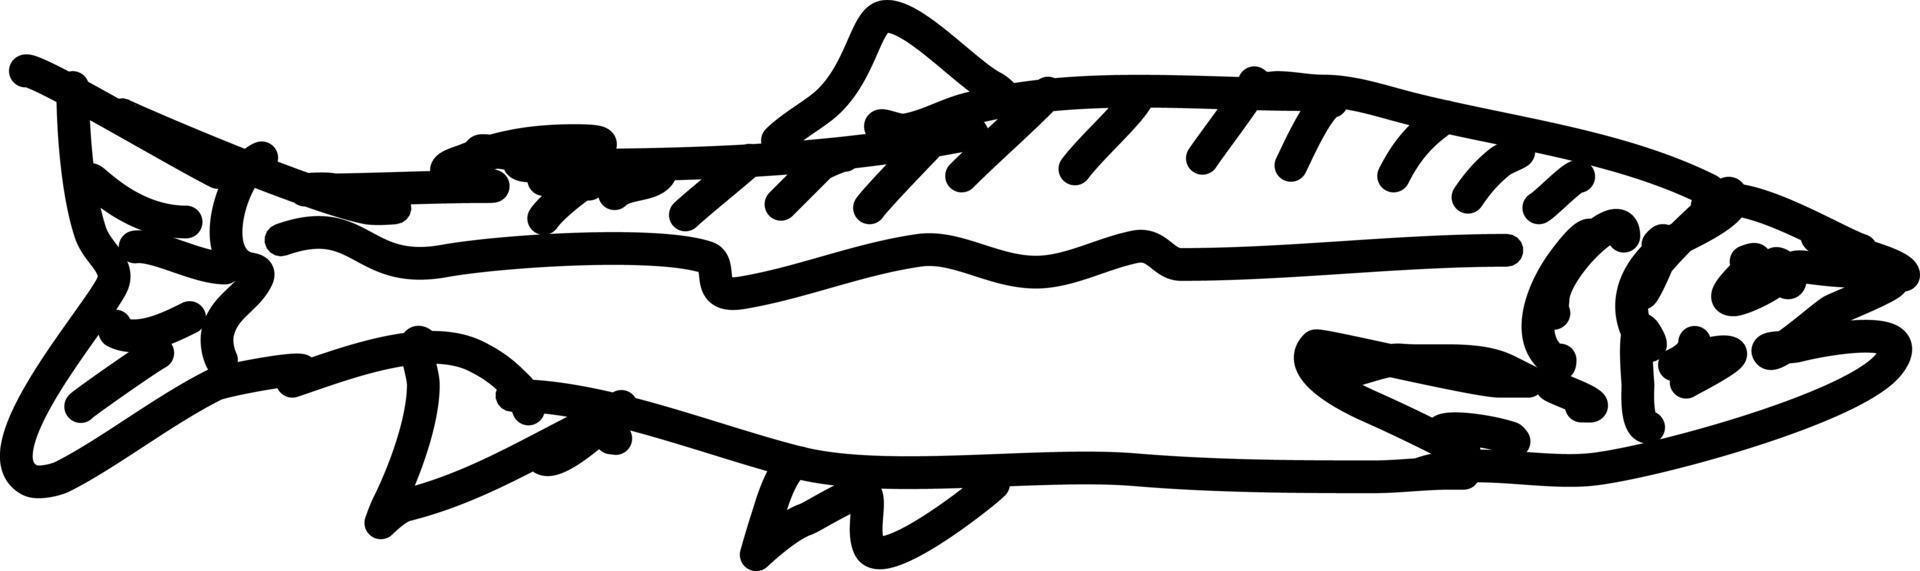 Fish sketch, illustration, vector on white background.